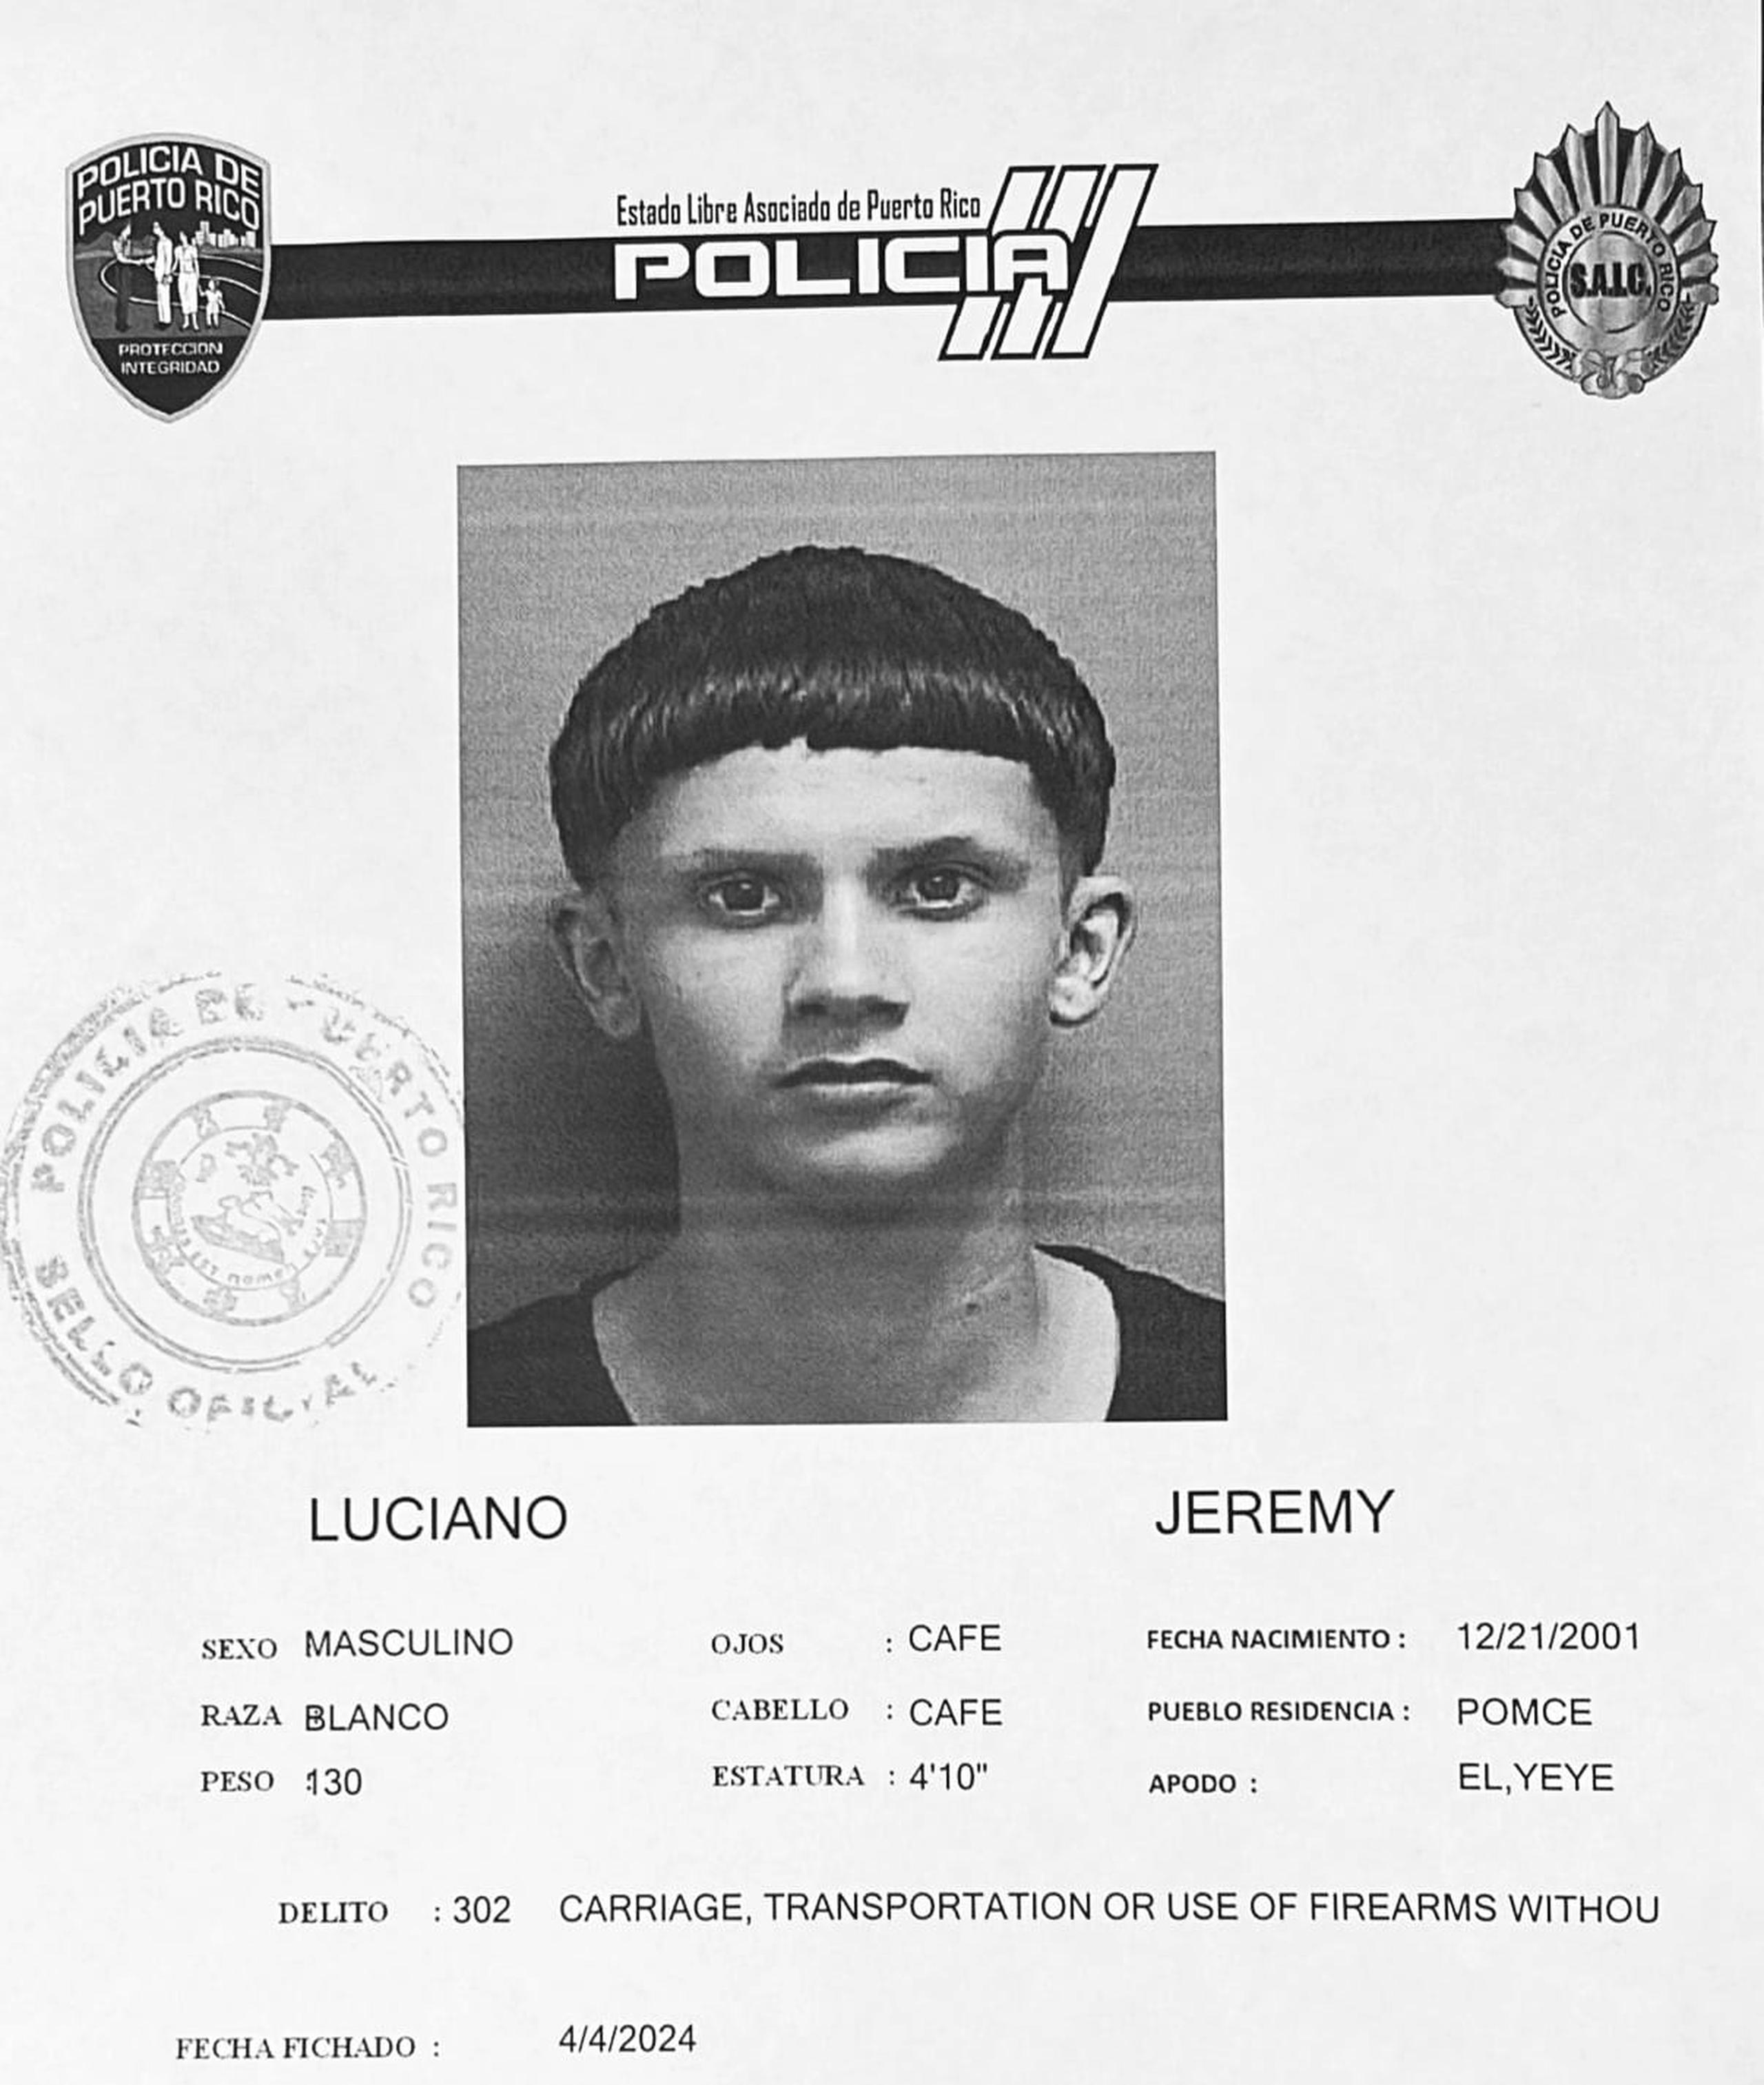 Jeremy Luciano enfenta cargos por tentativa de asesinato contra tres agentes de drogas.